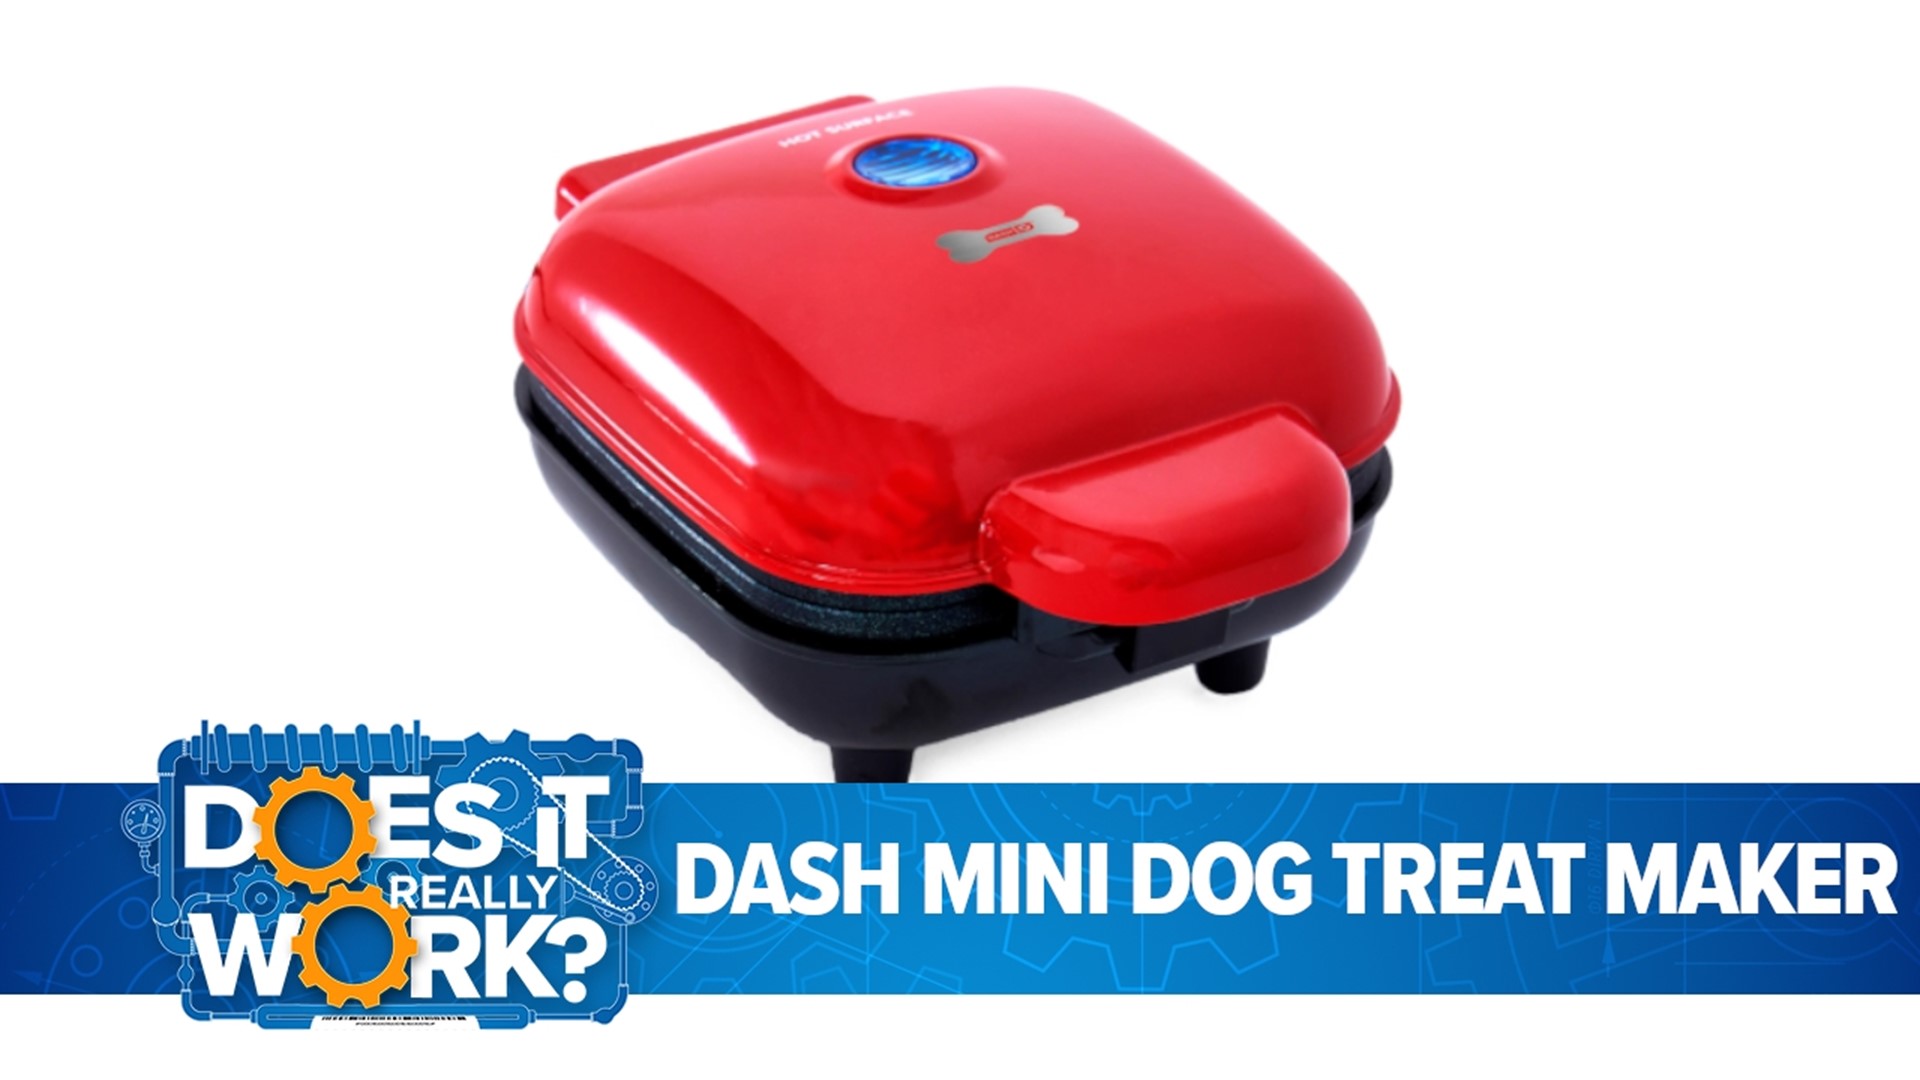 Dash Mini Dog Treat Maker, Does It Really Work?